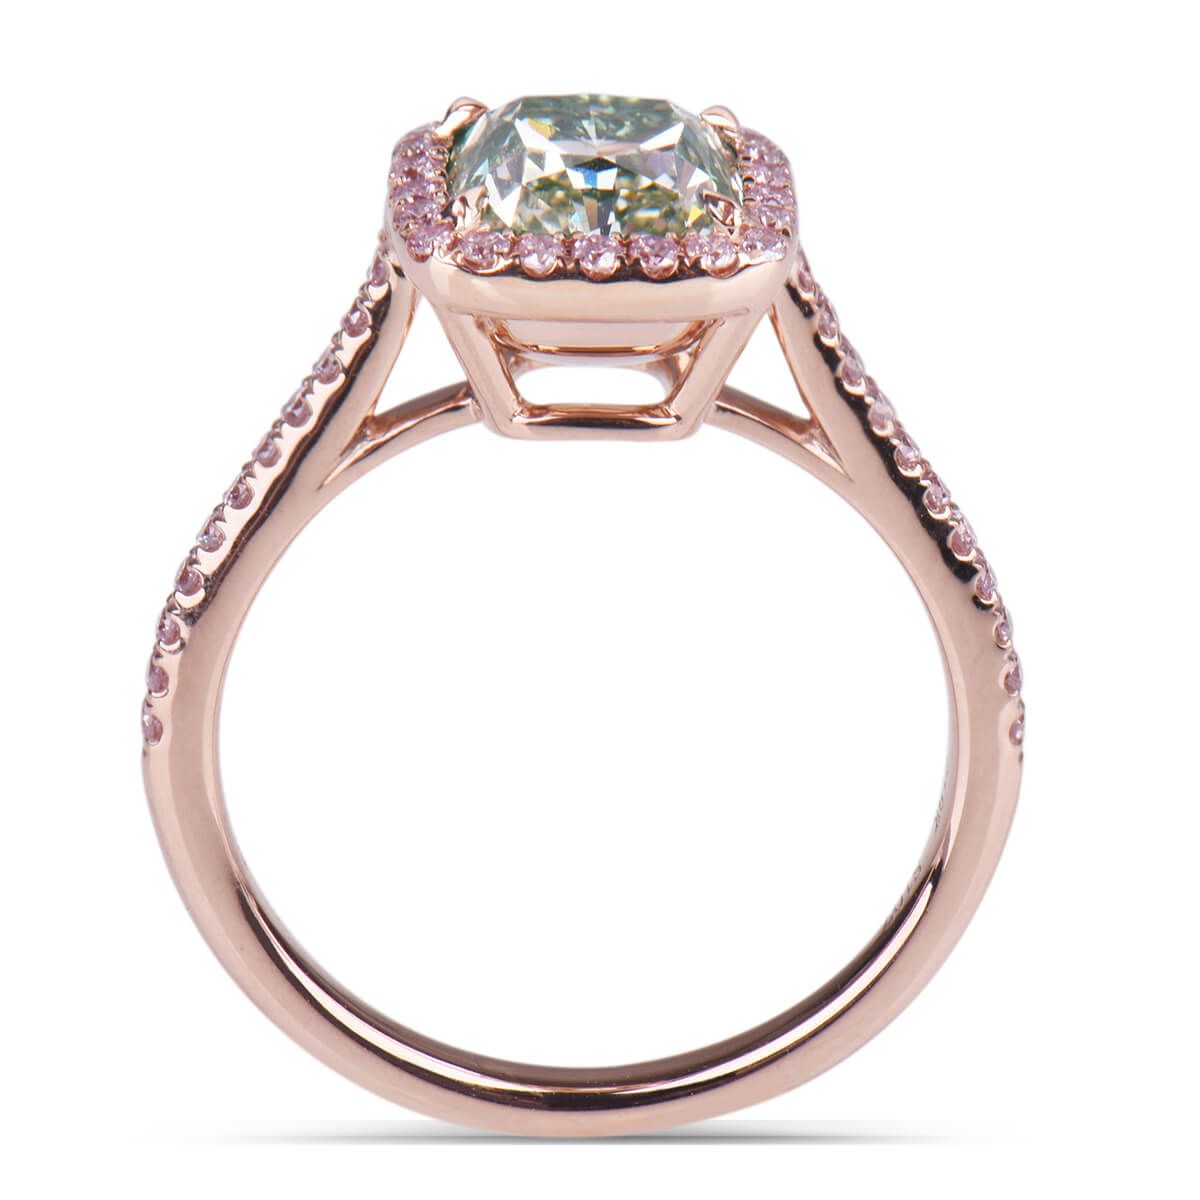 Light Green Yellow Diamond Ring, 2.00 Ct. (2.27 Ct. TW), Cushion shape, GIA Certified, 2185460763